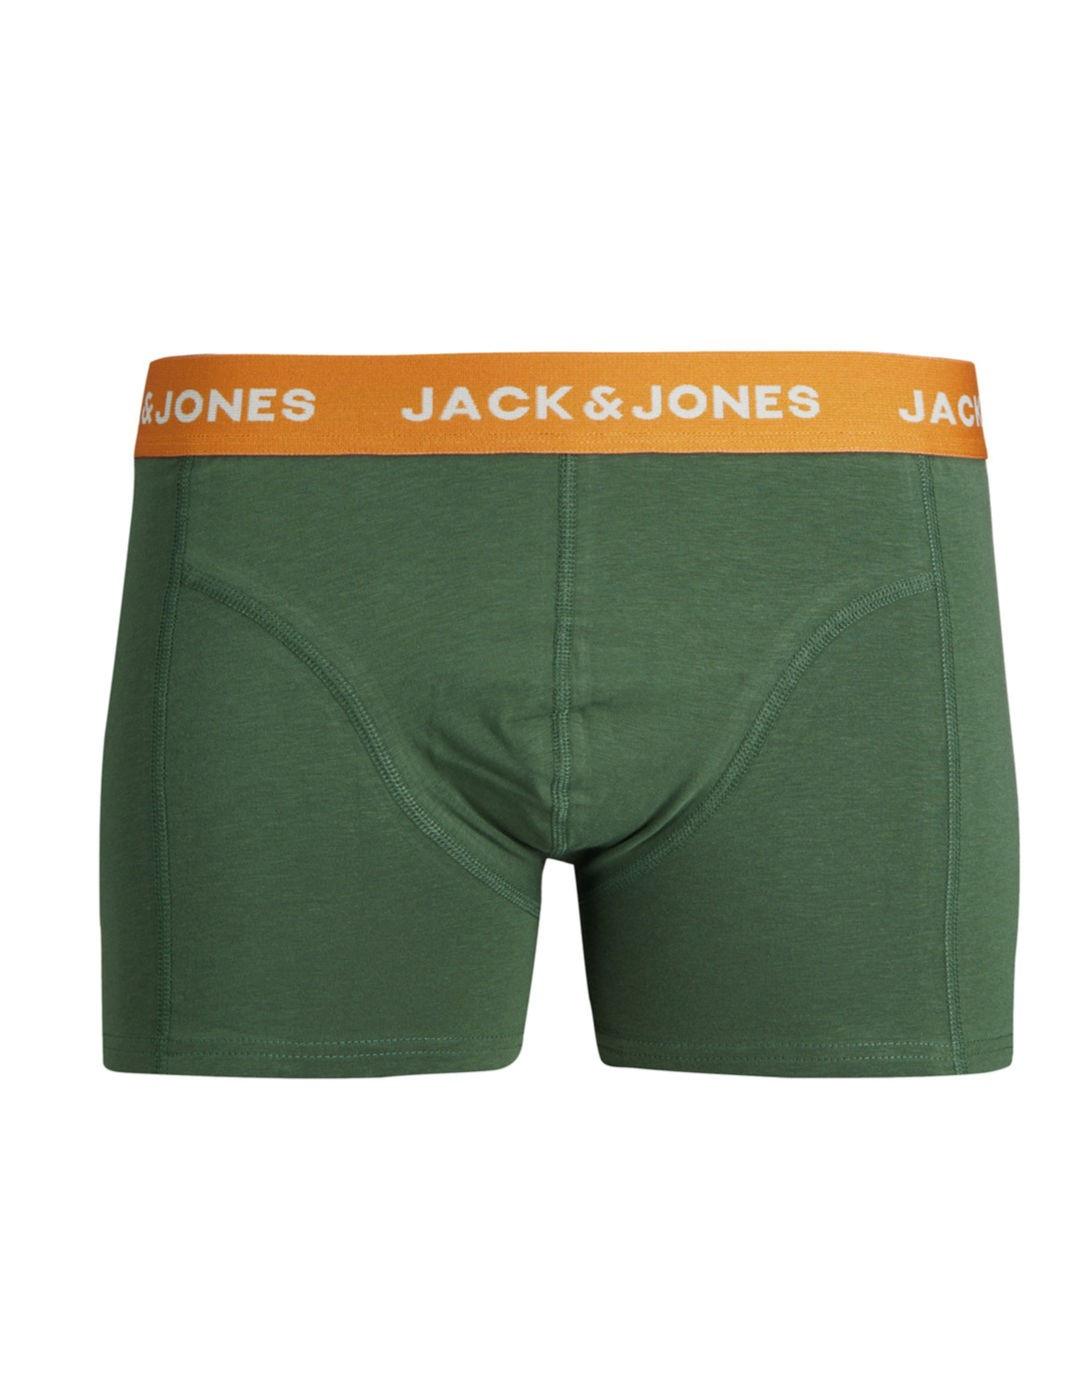 Intimo Jack&Jones pack3 verde trunk para hombre